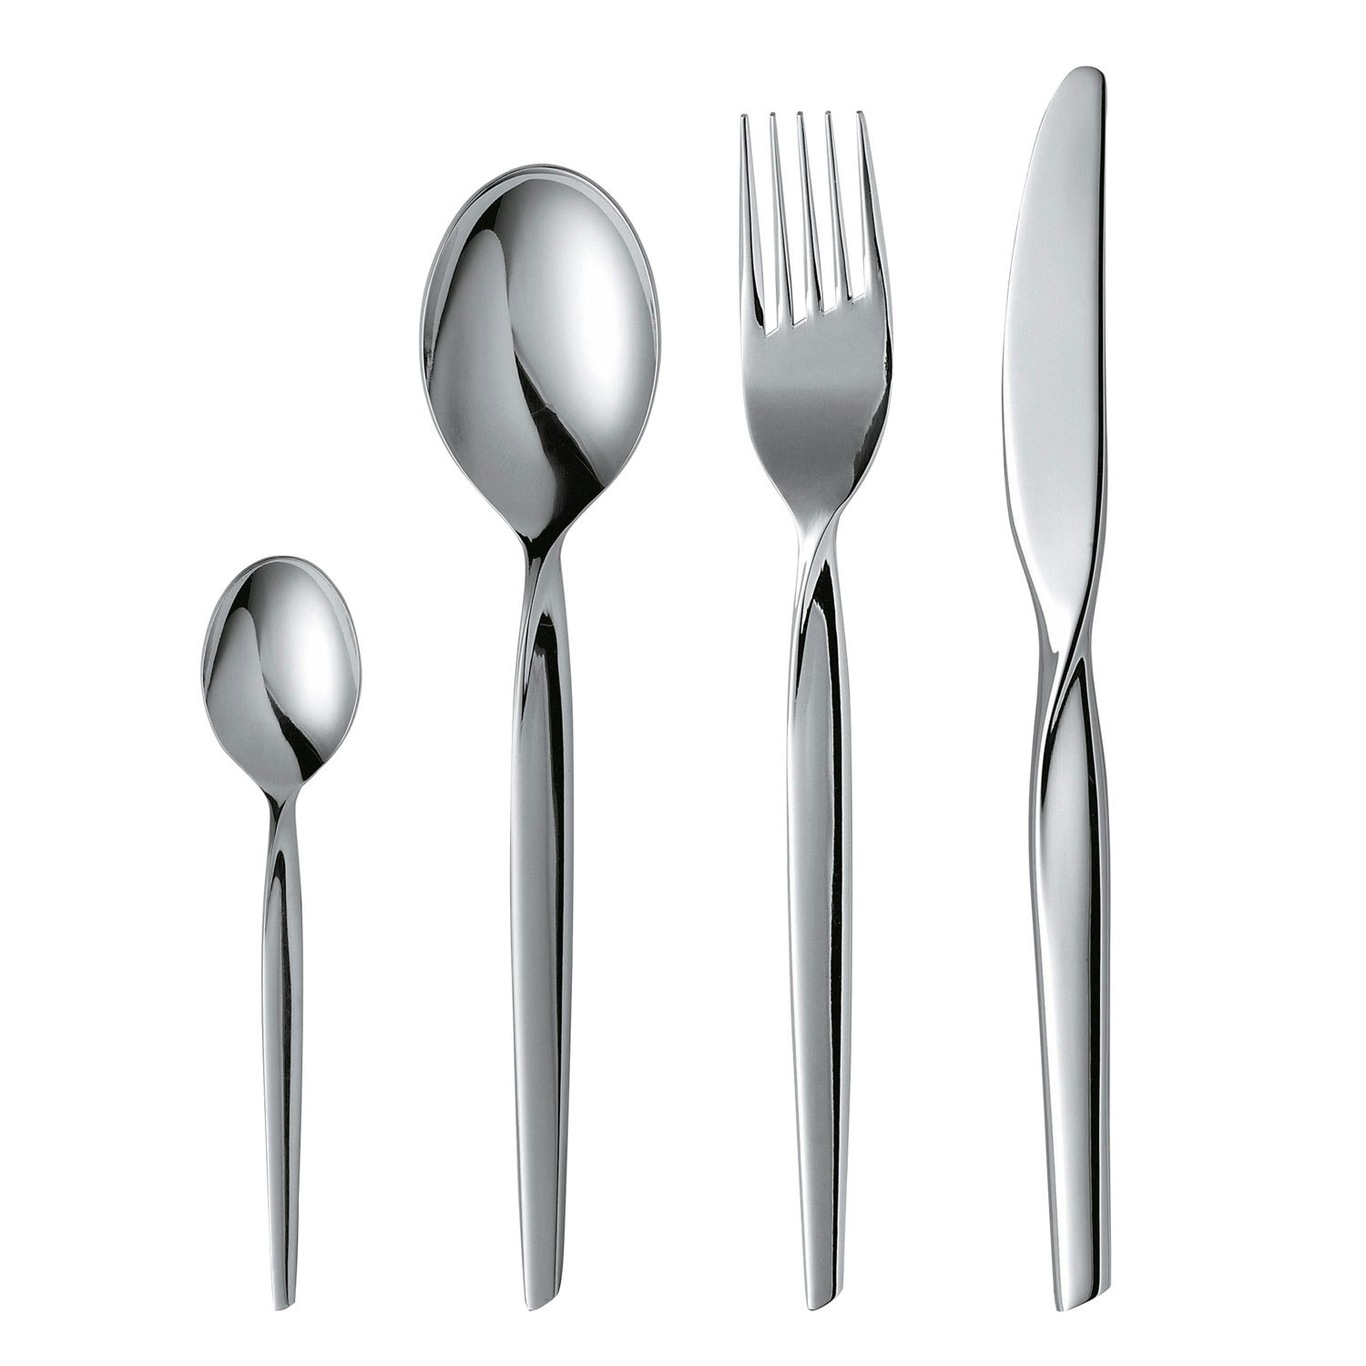 https://royaldesign.com/image/2/gense-twist-cutlery-16-pieces-0?w=800&quality=80